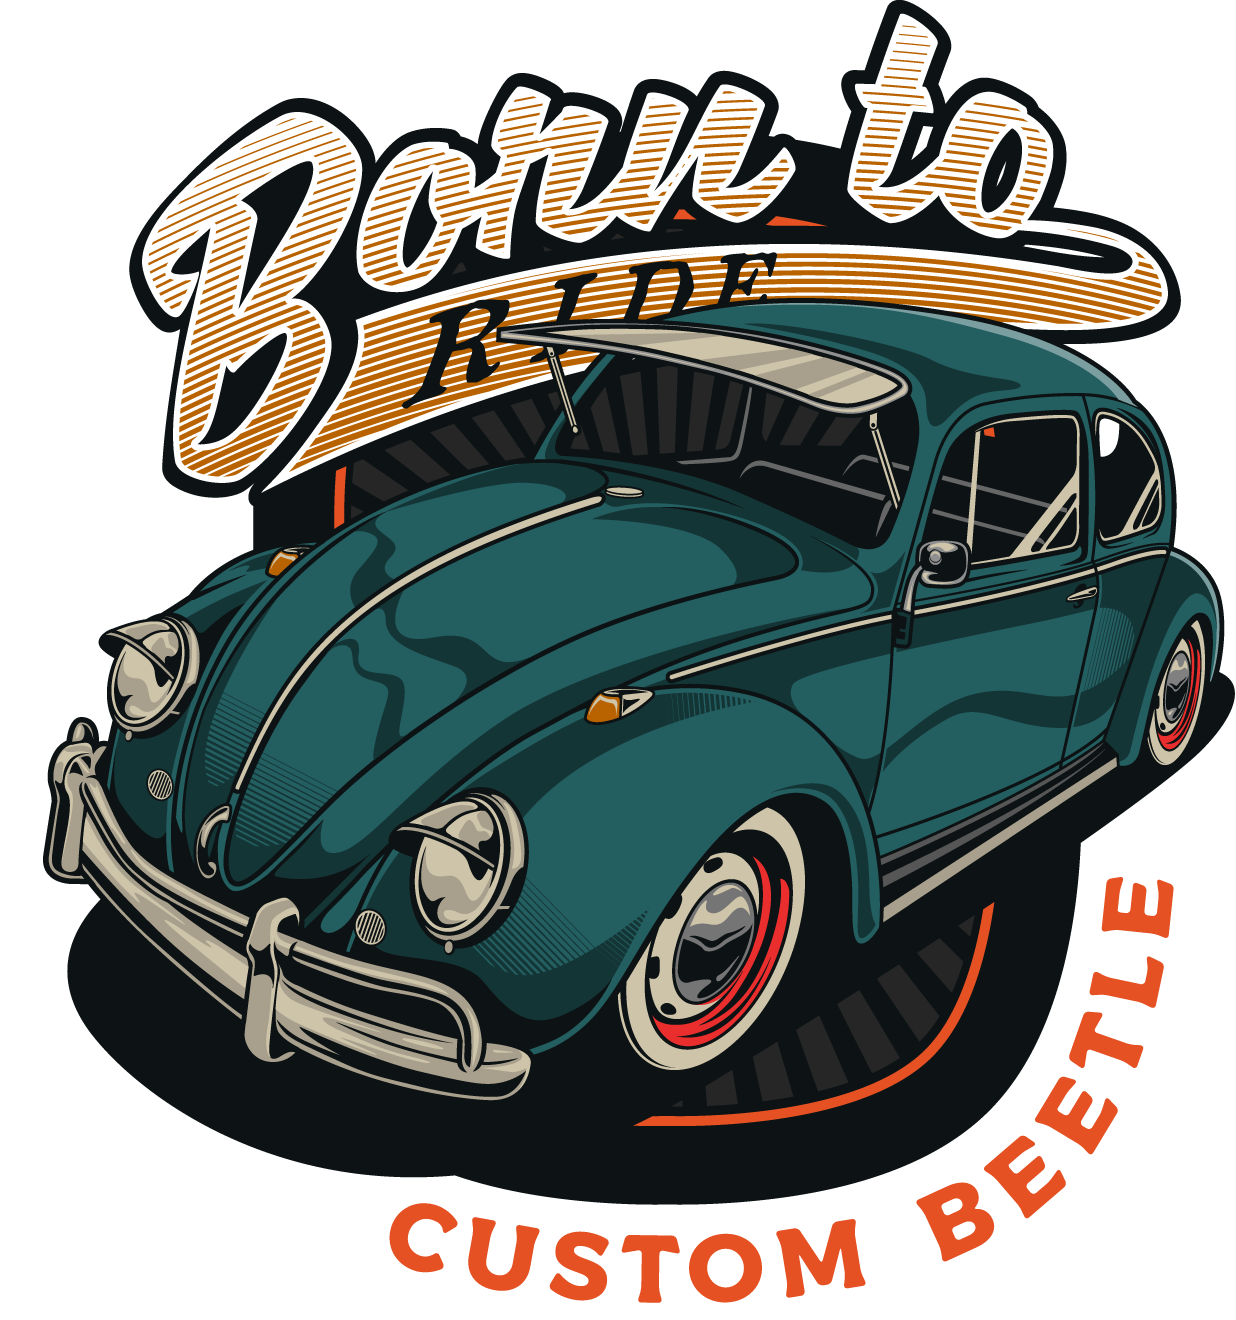 Born to Ride Custom Beetle